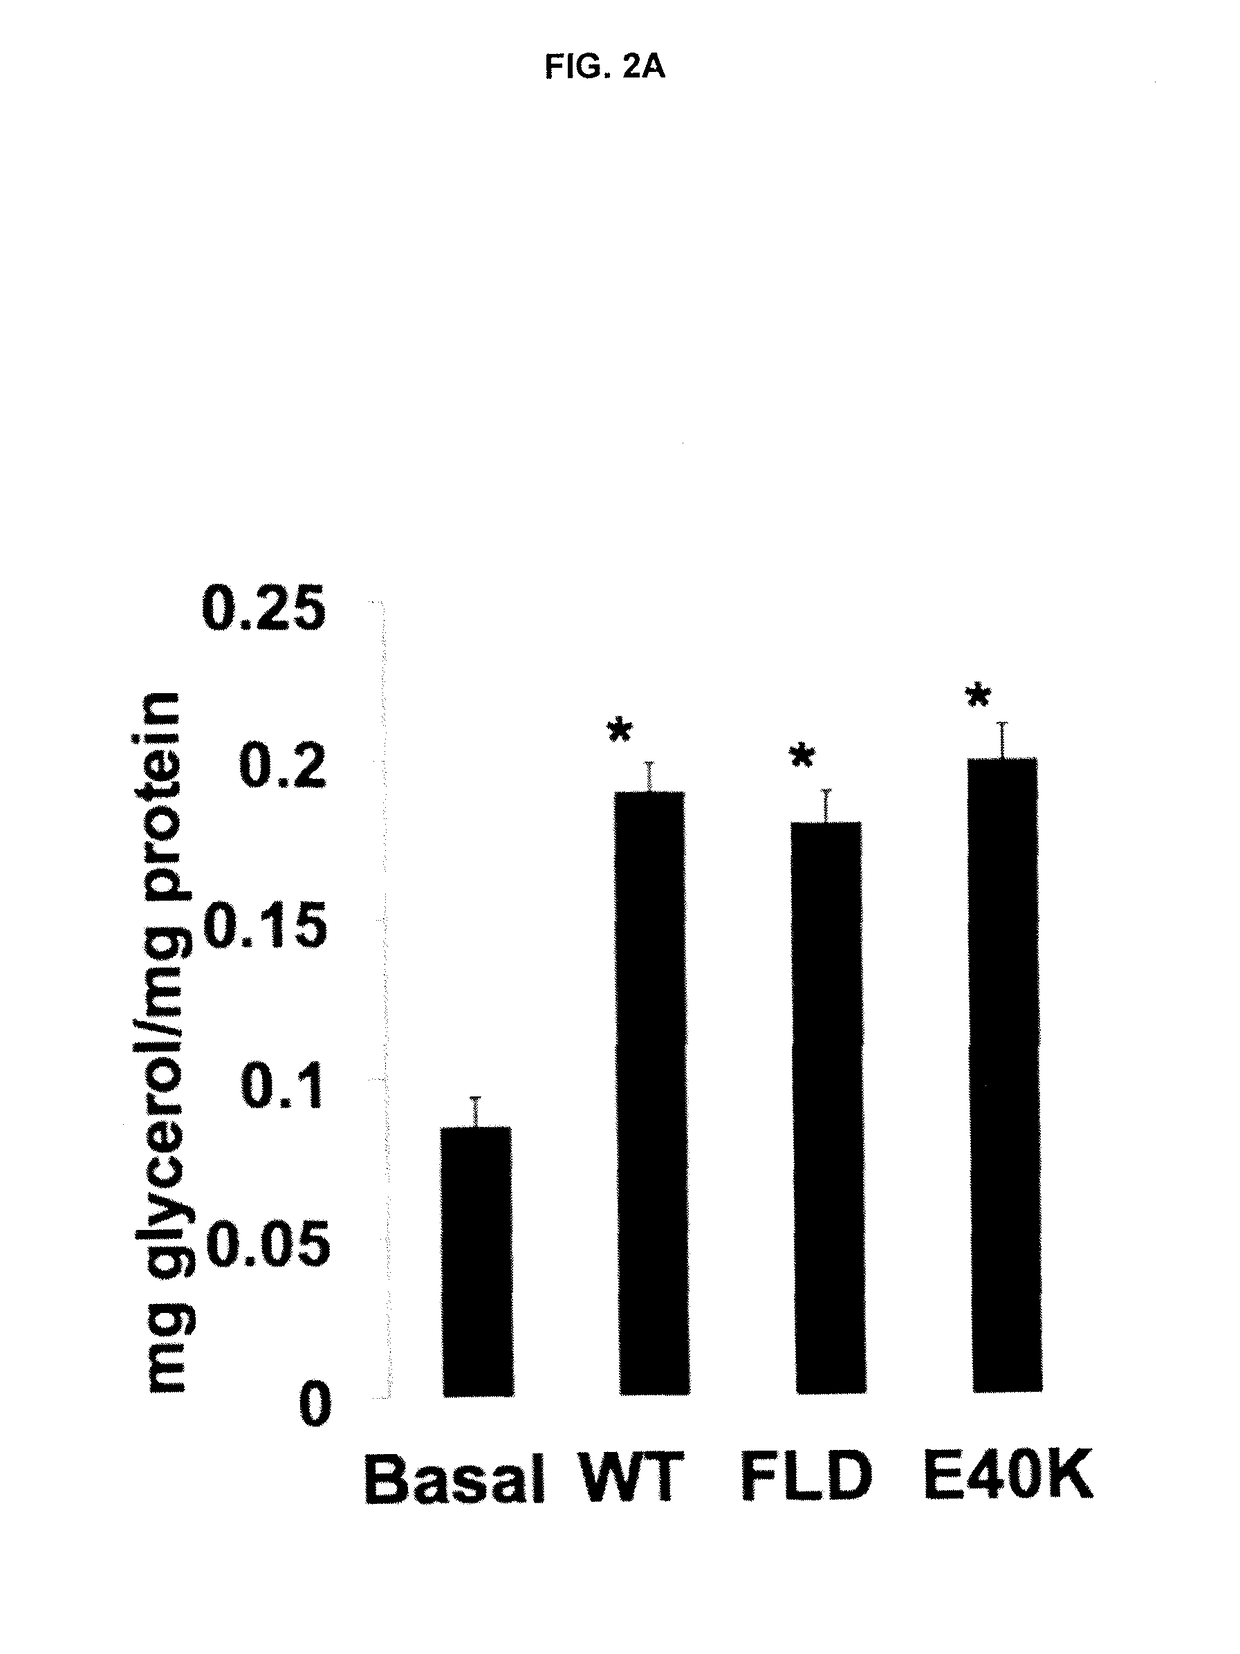 Anti-obesity and Anti-diabetic effects of angiopoietin-like 4 (angptl4) fibrinogen-like domain